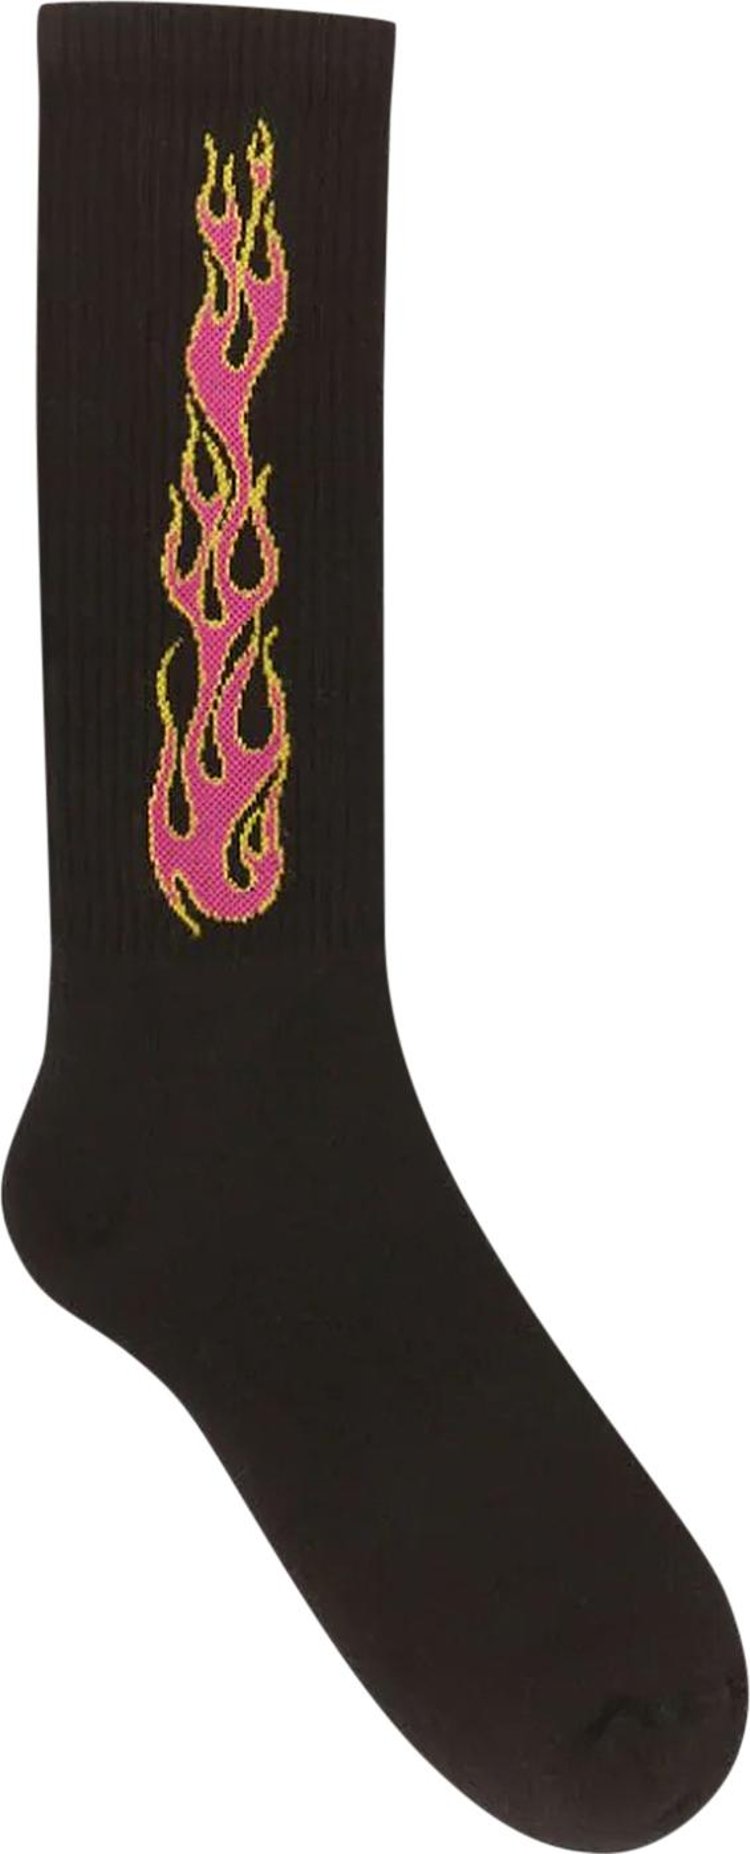 Palm Angels Flames Socks 'Black/Fuchsia'